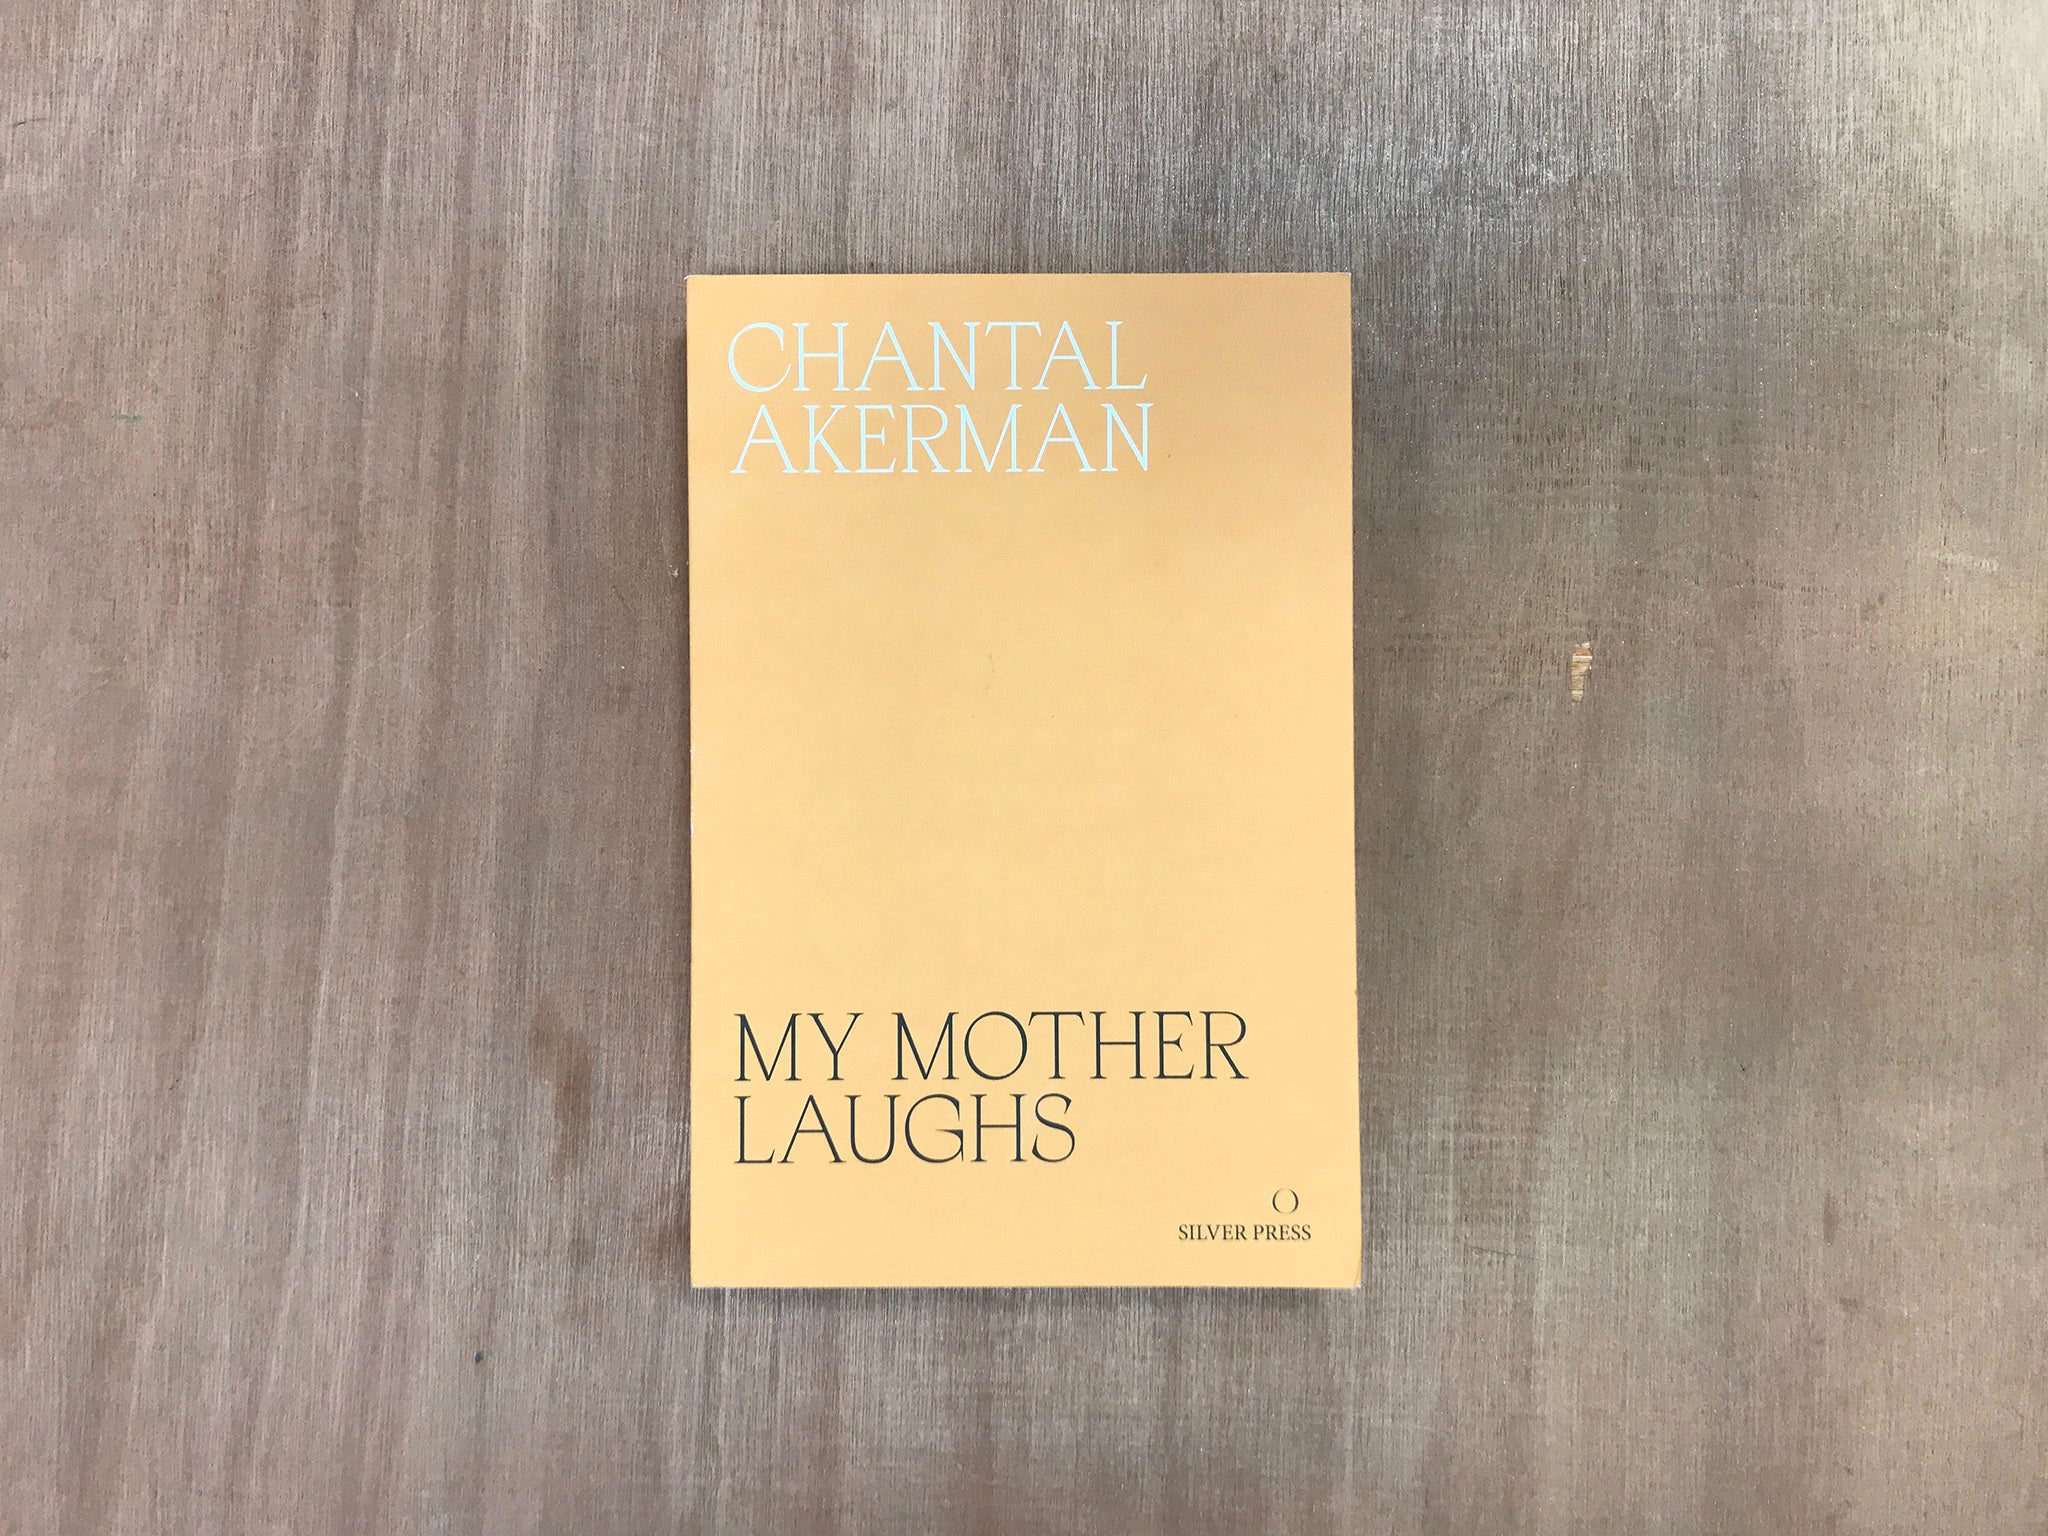 MY MOTHER LAUGHS by Chantal Akerman